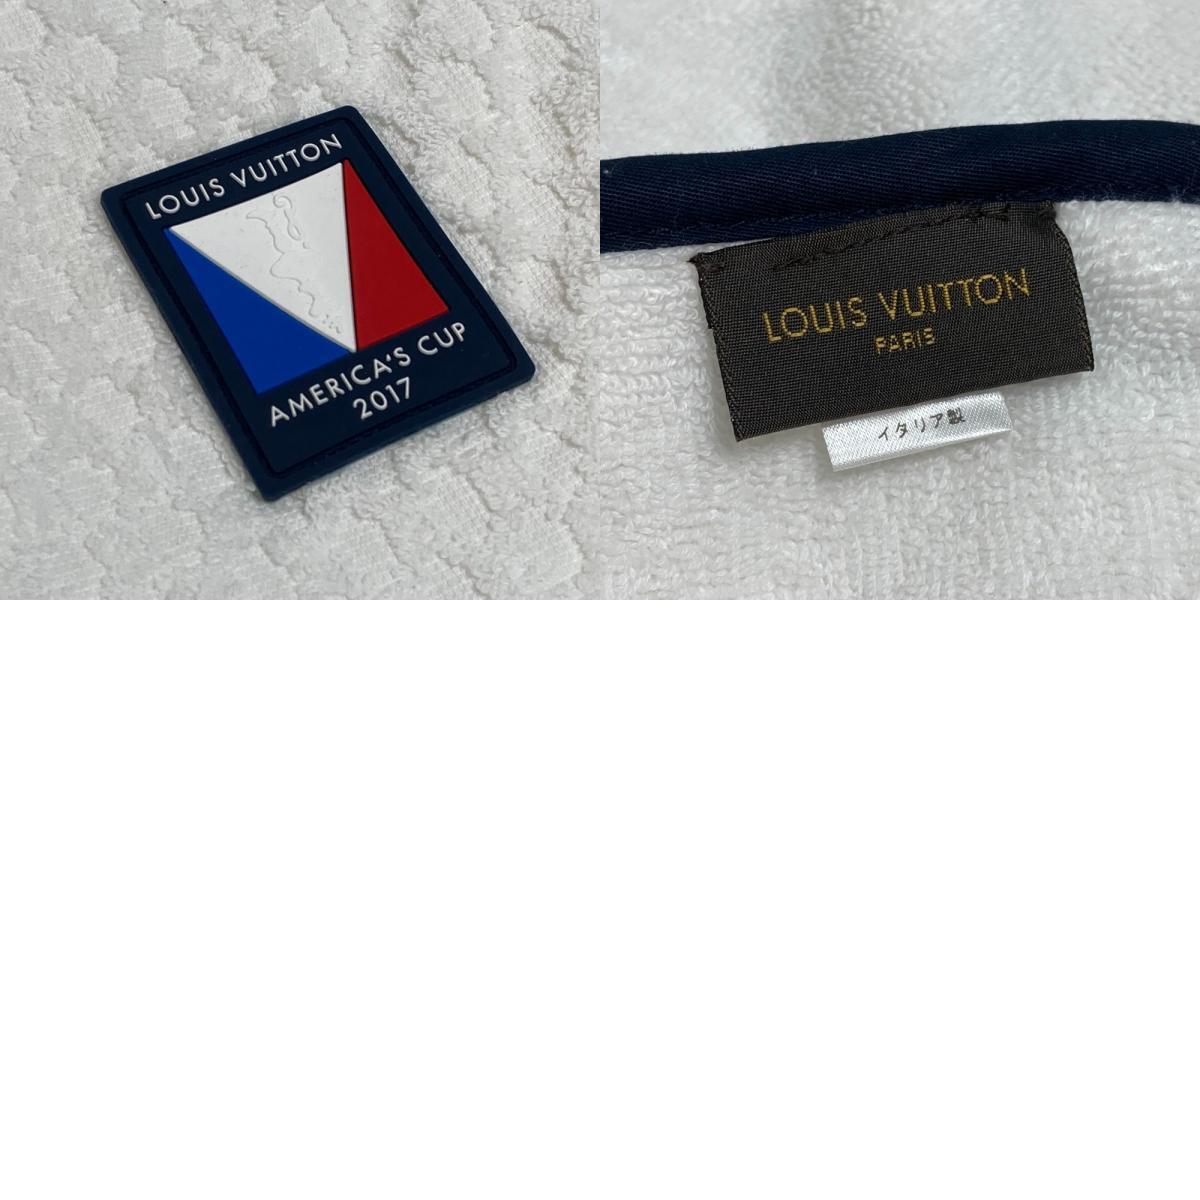 LOUIS VUITTON Louis Vuitton bath towel 2017 America z cup beach ta Horta oru cotton white unisex [ used ] unused 